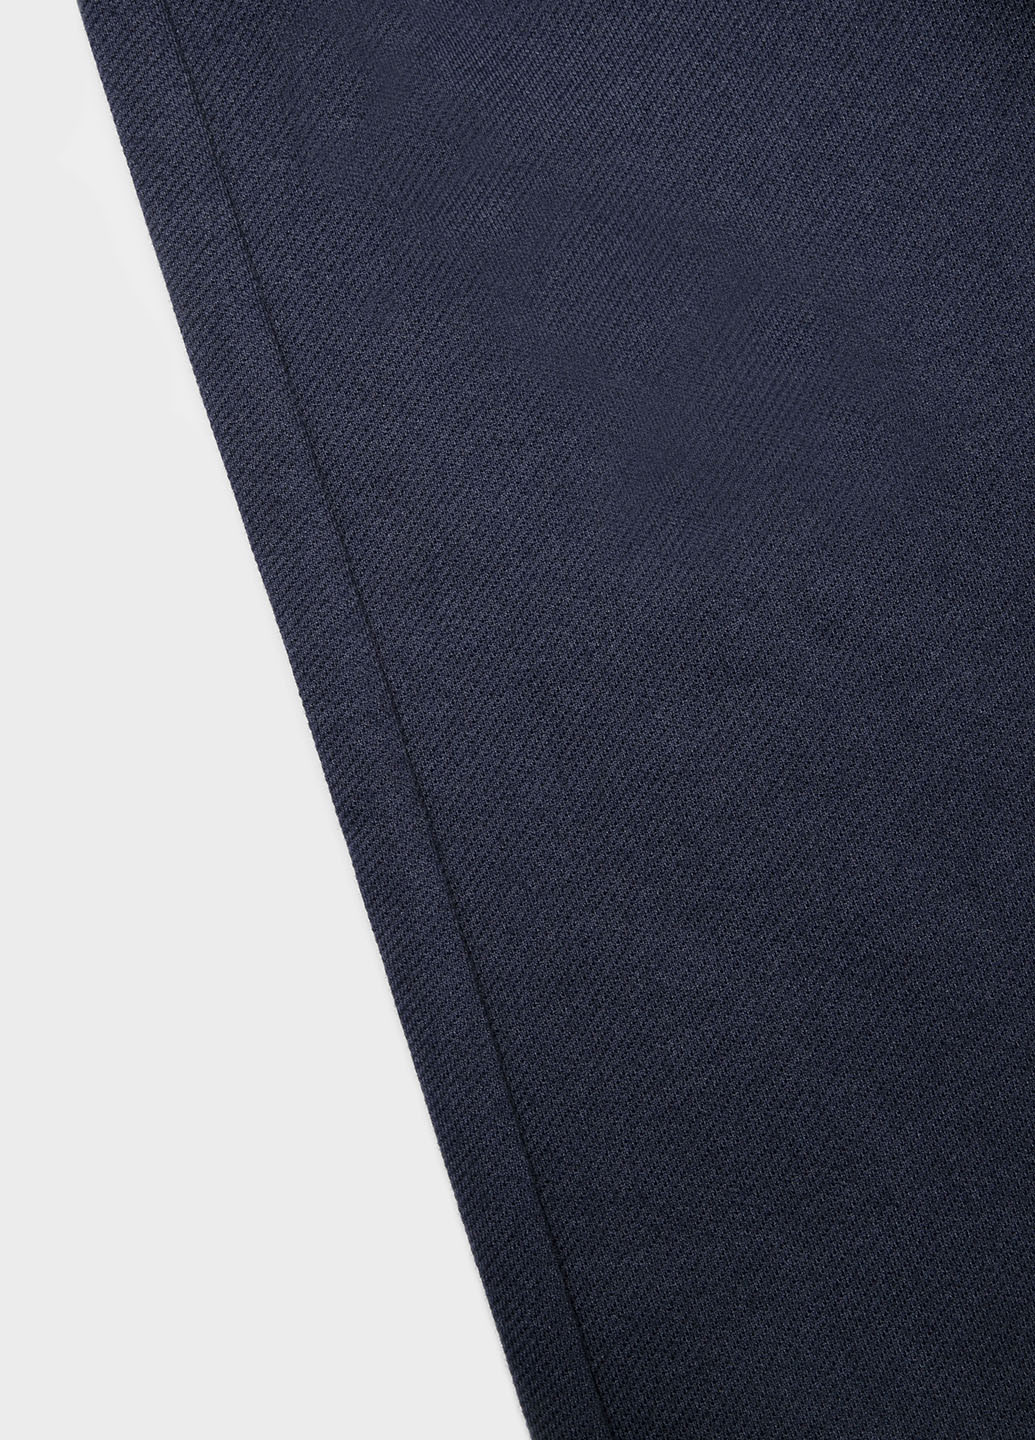 Темно-синие кэжуал демисезонные палаццо брюки Coccodrillo